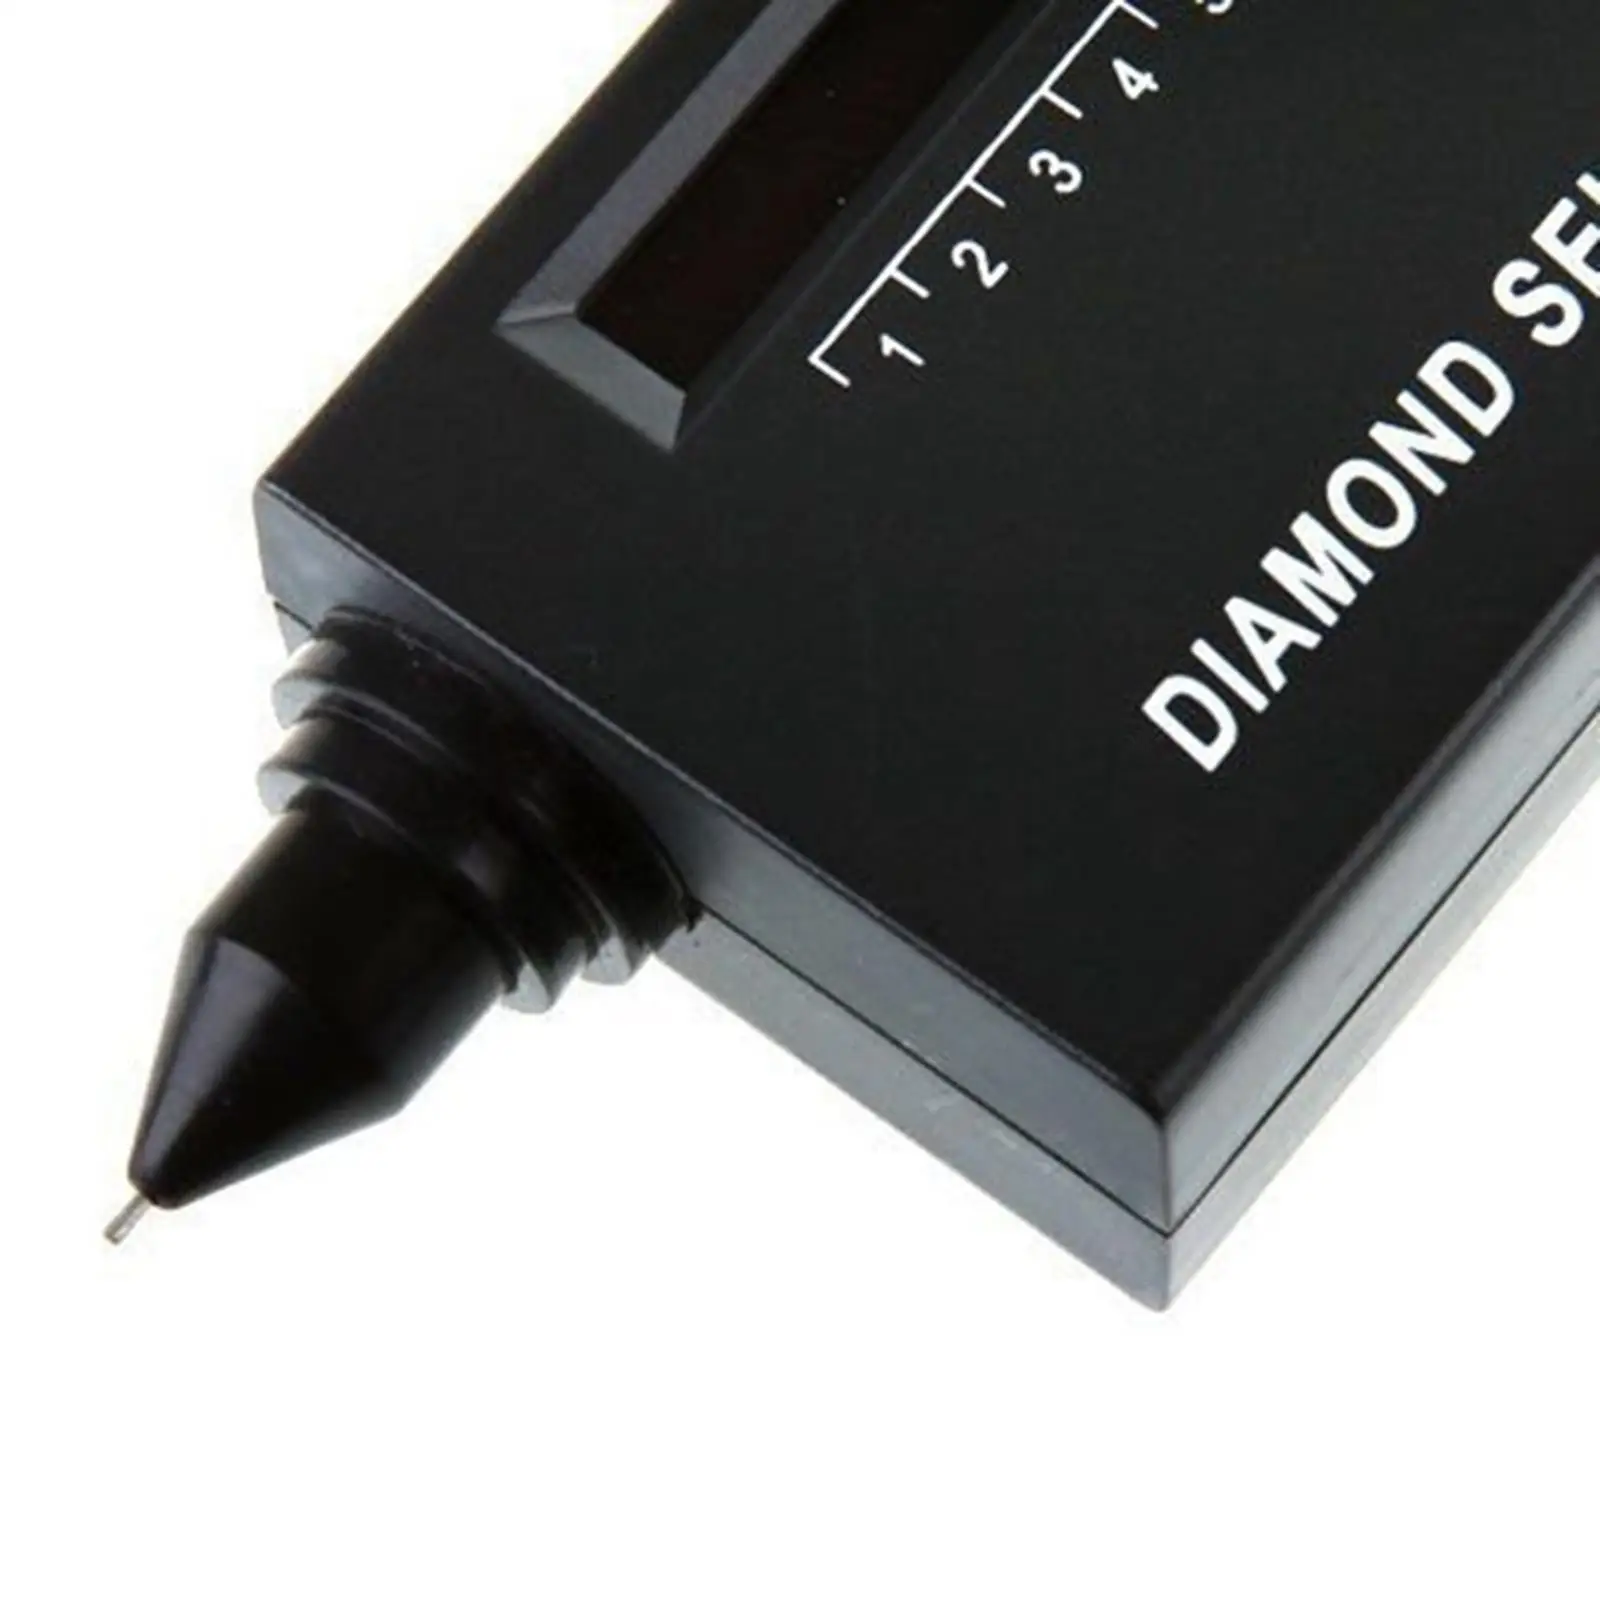 Moissanite Diamond Tester Selector II Illuminated Jewelry Gemstone Tool